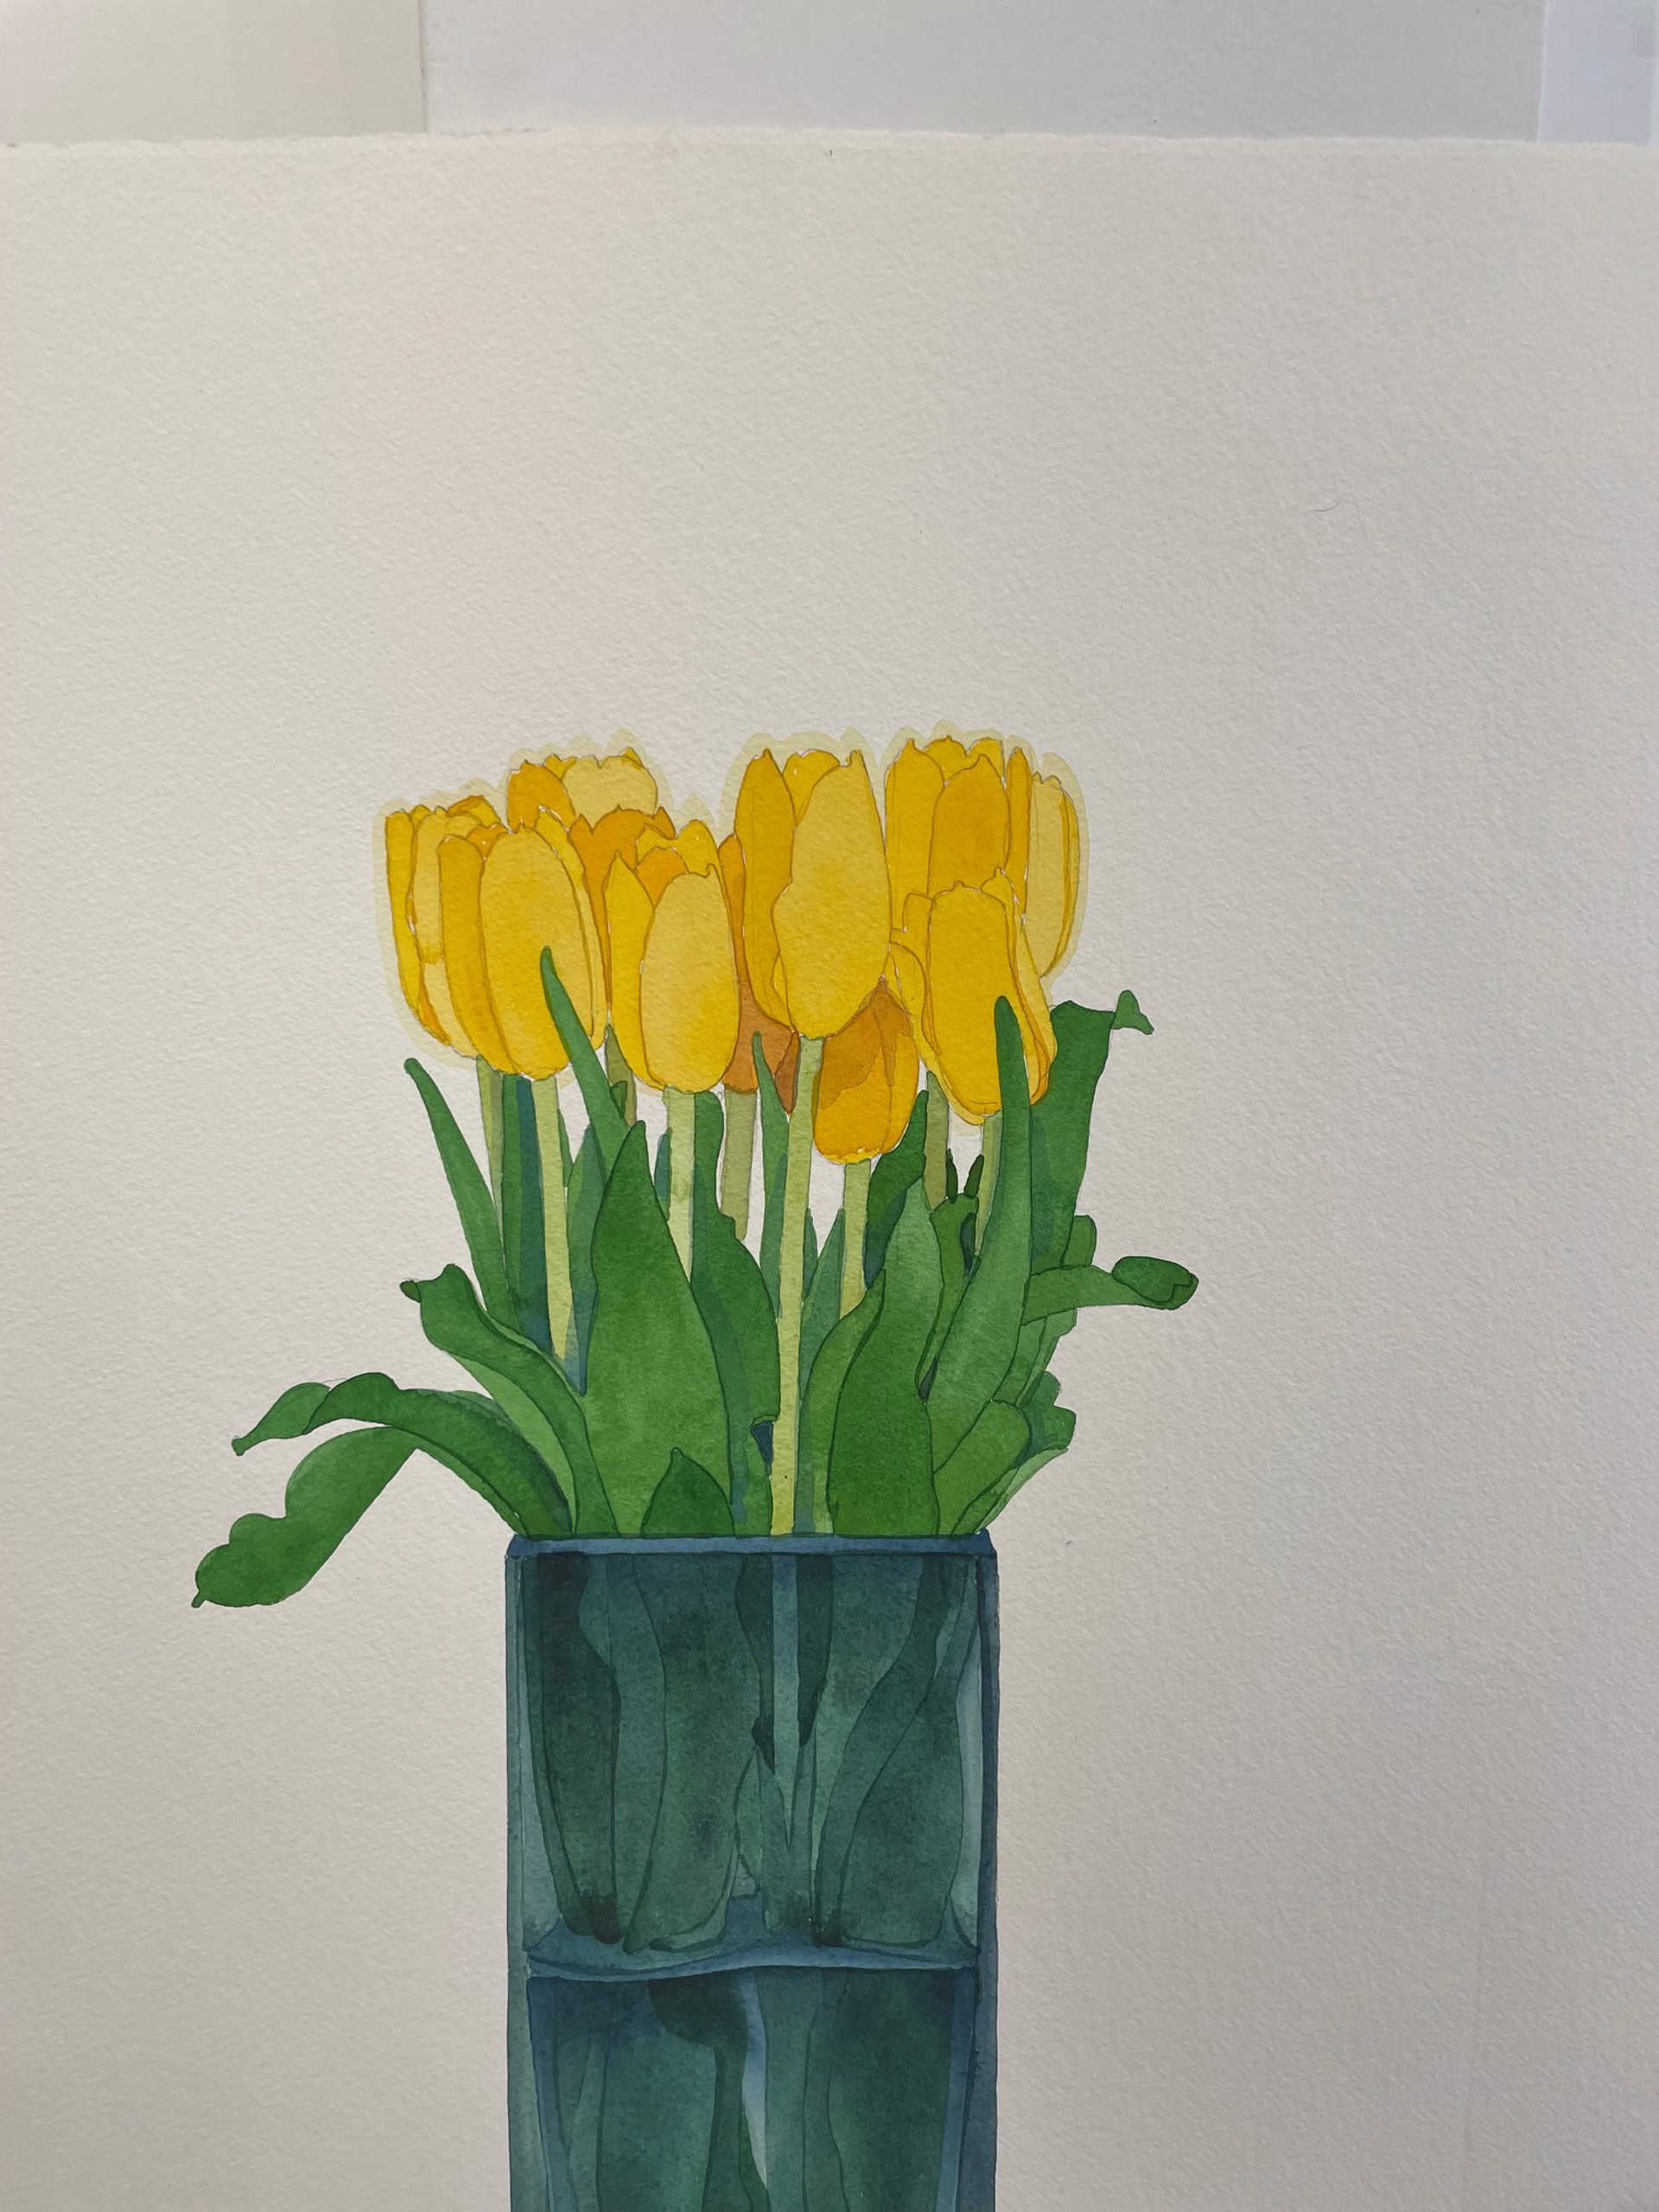 Still life with Yellow Garden Tulips (unframed) by Gary Bukovnik